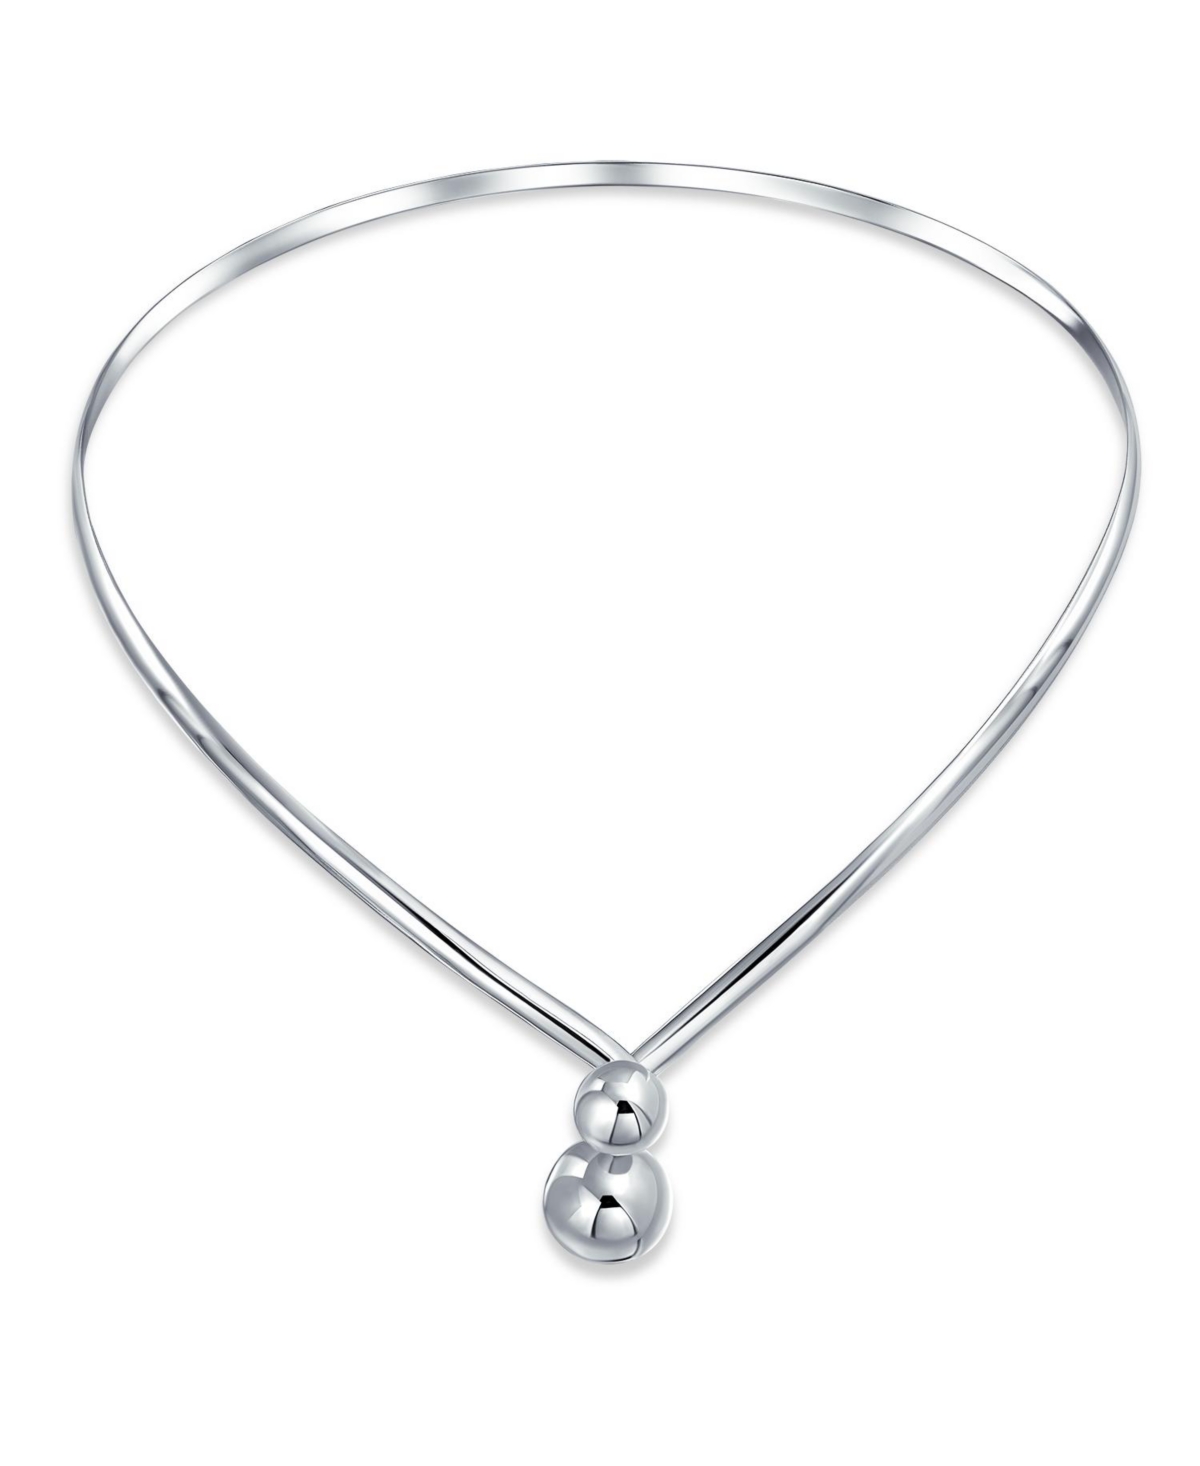 Geometric Choker V Shape Interlocking Balls Collar Statement Necklace For Women .925 Silver Sterling - Silver